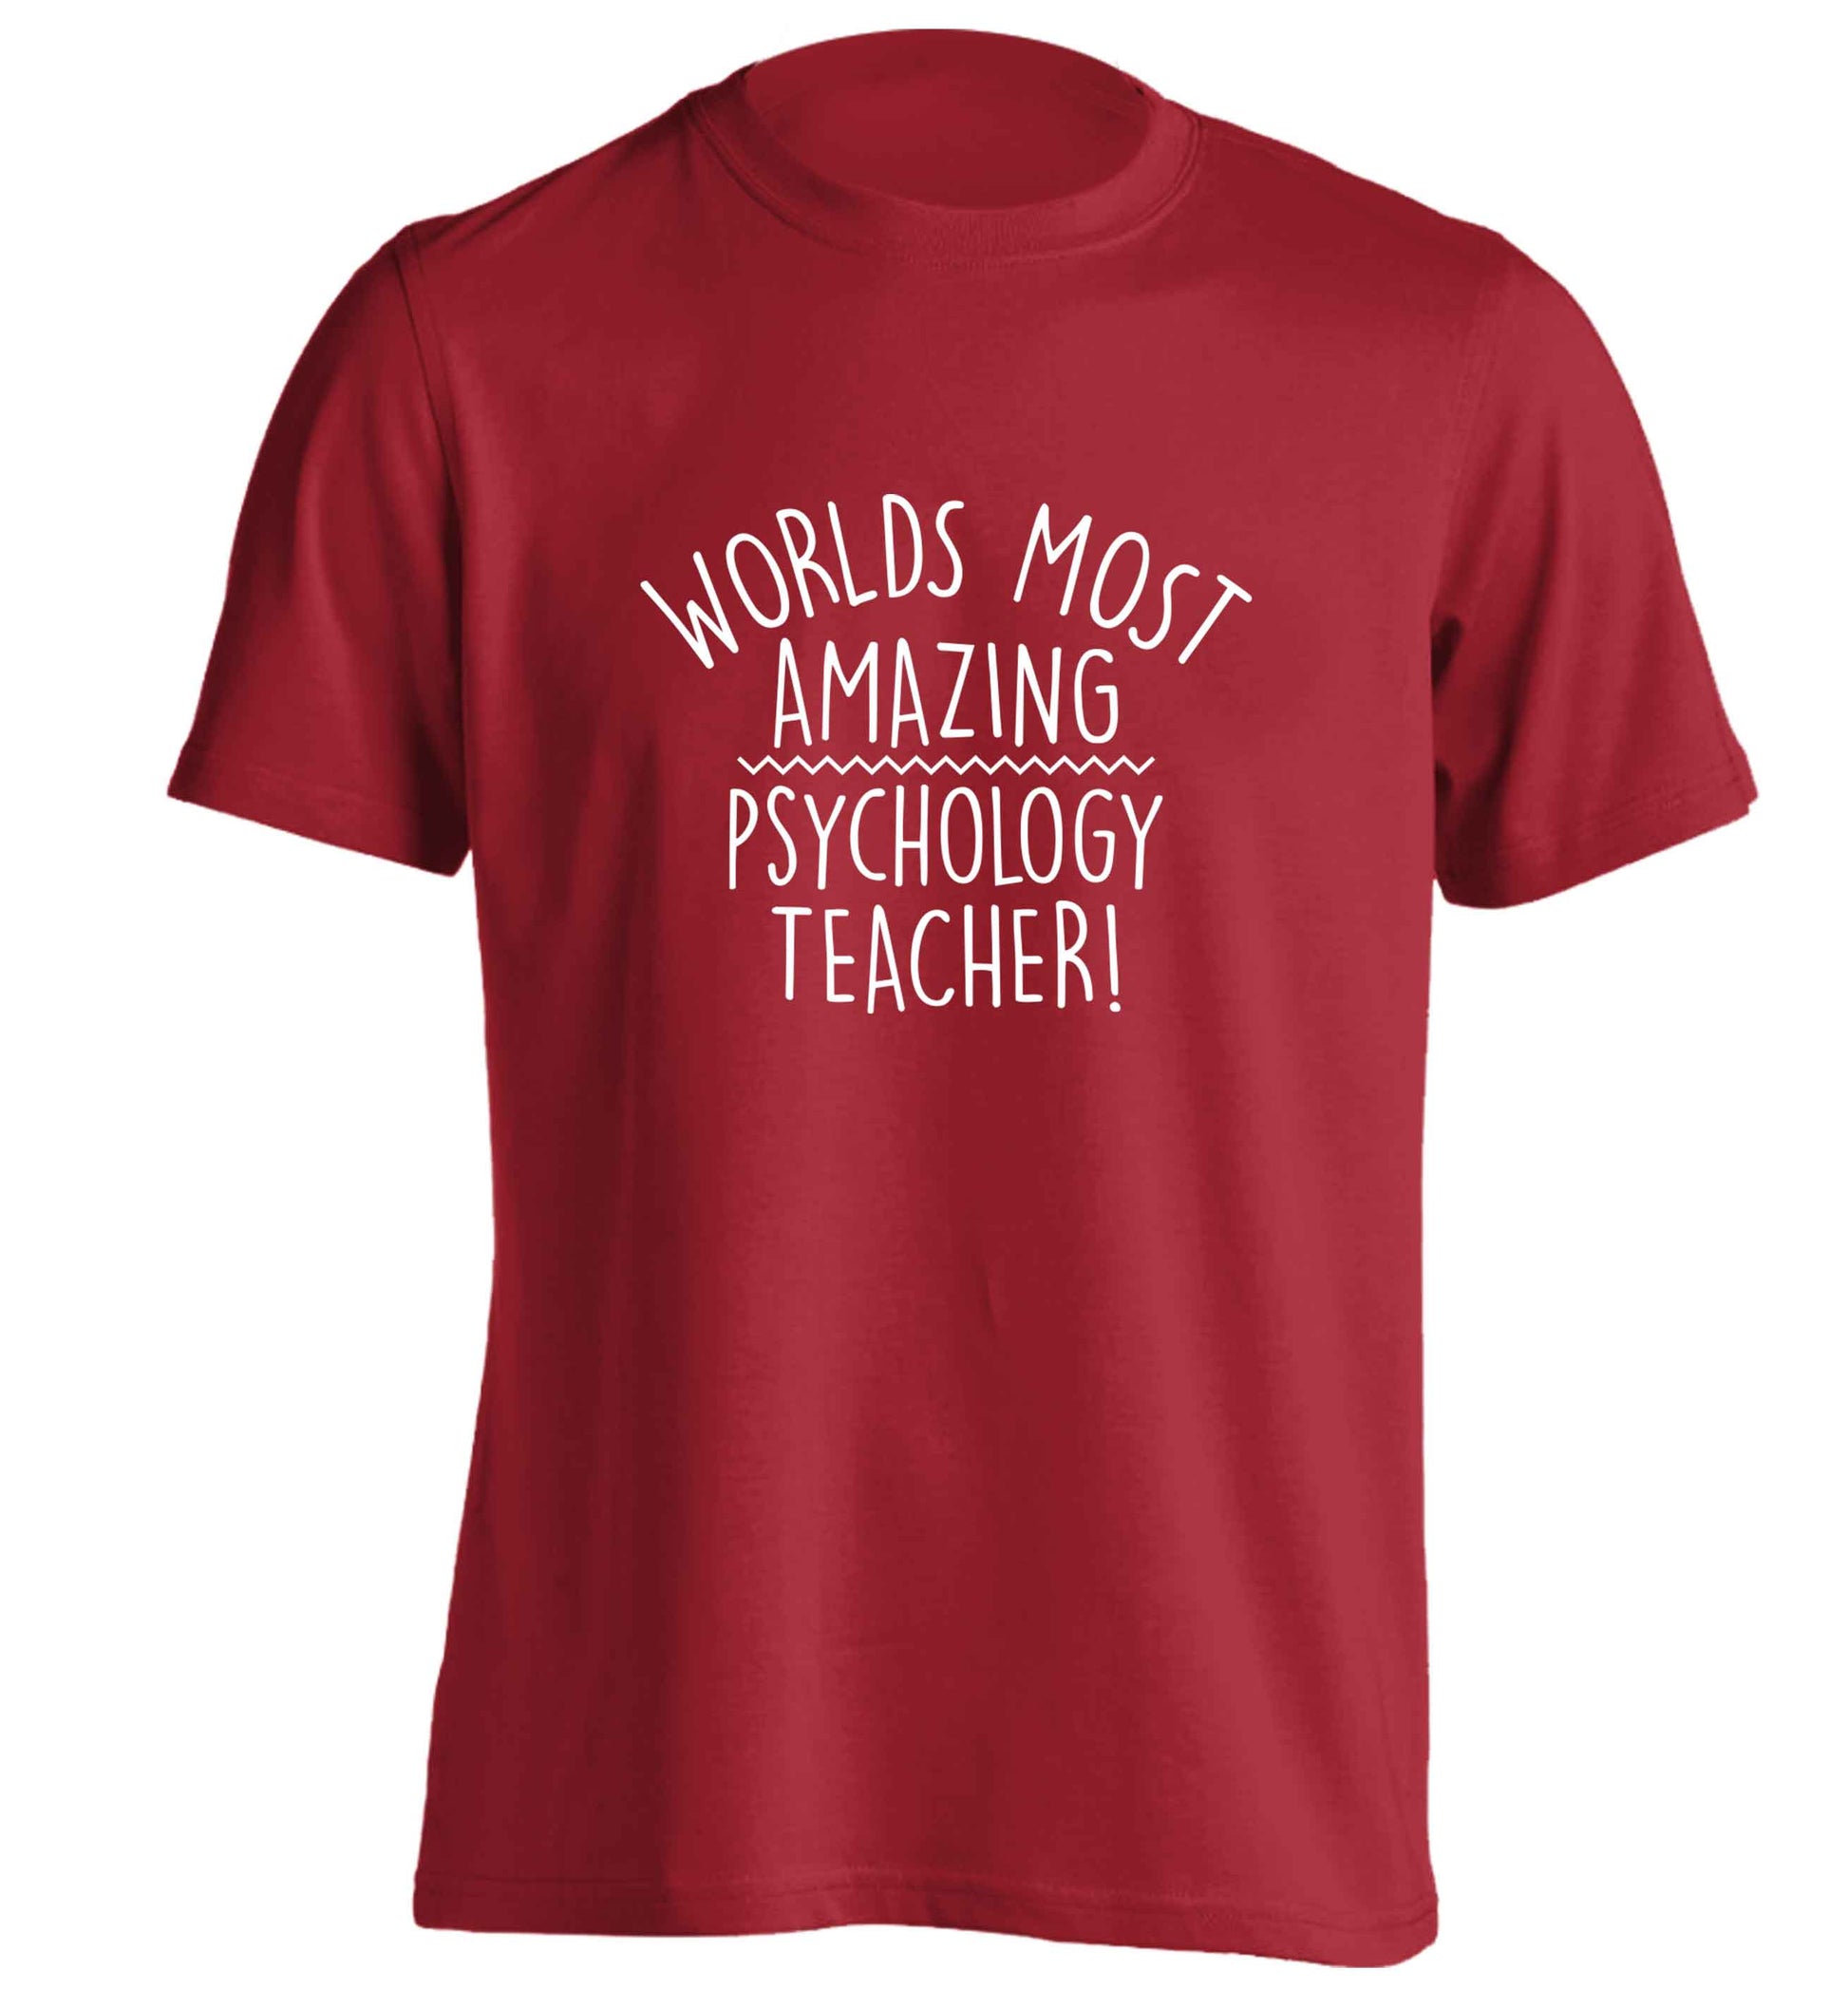 Worlds most amazing psychology teacher adults unisex red Tshirt 2XL